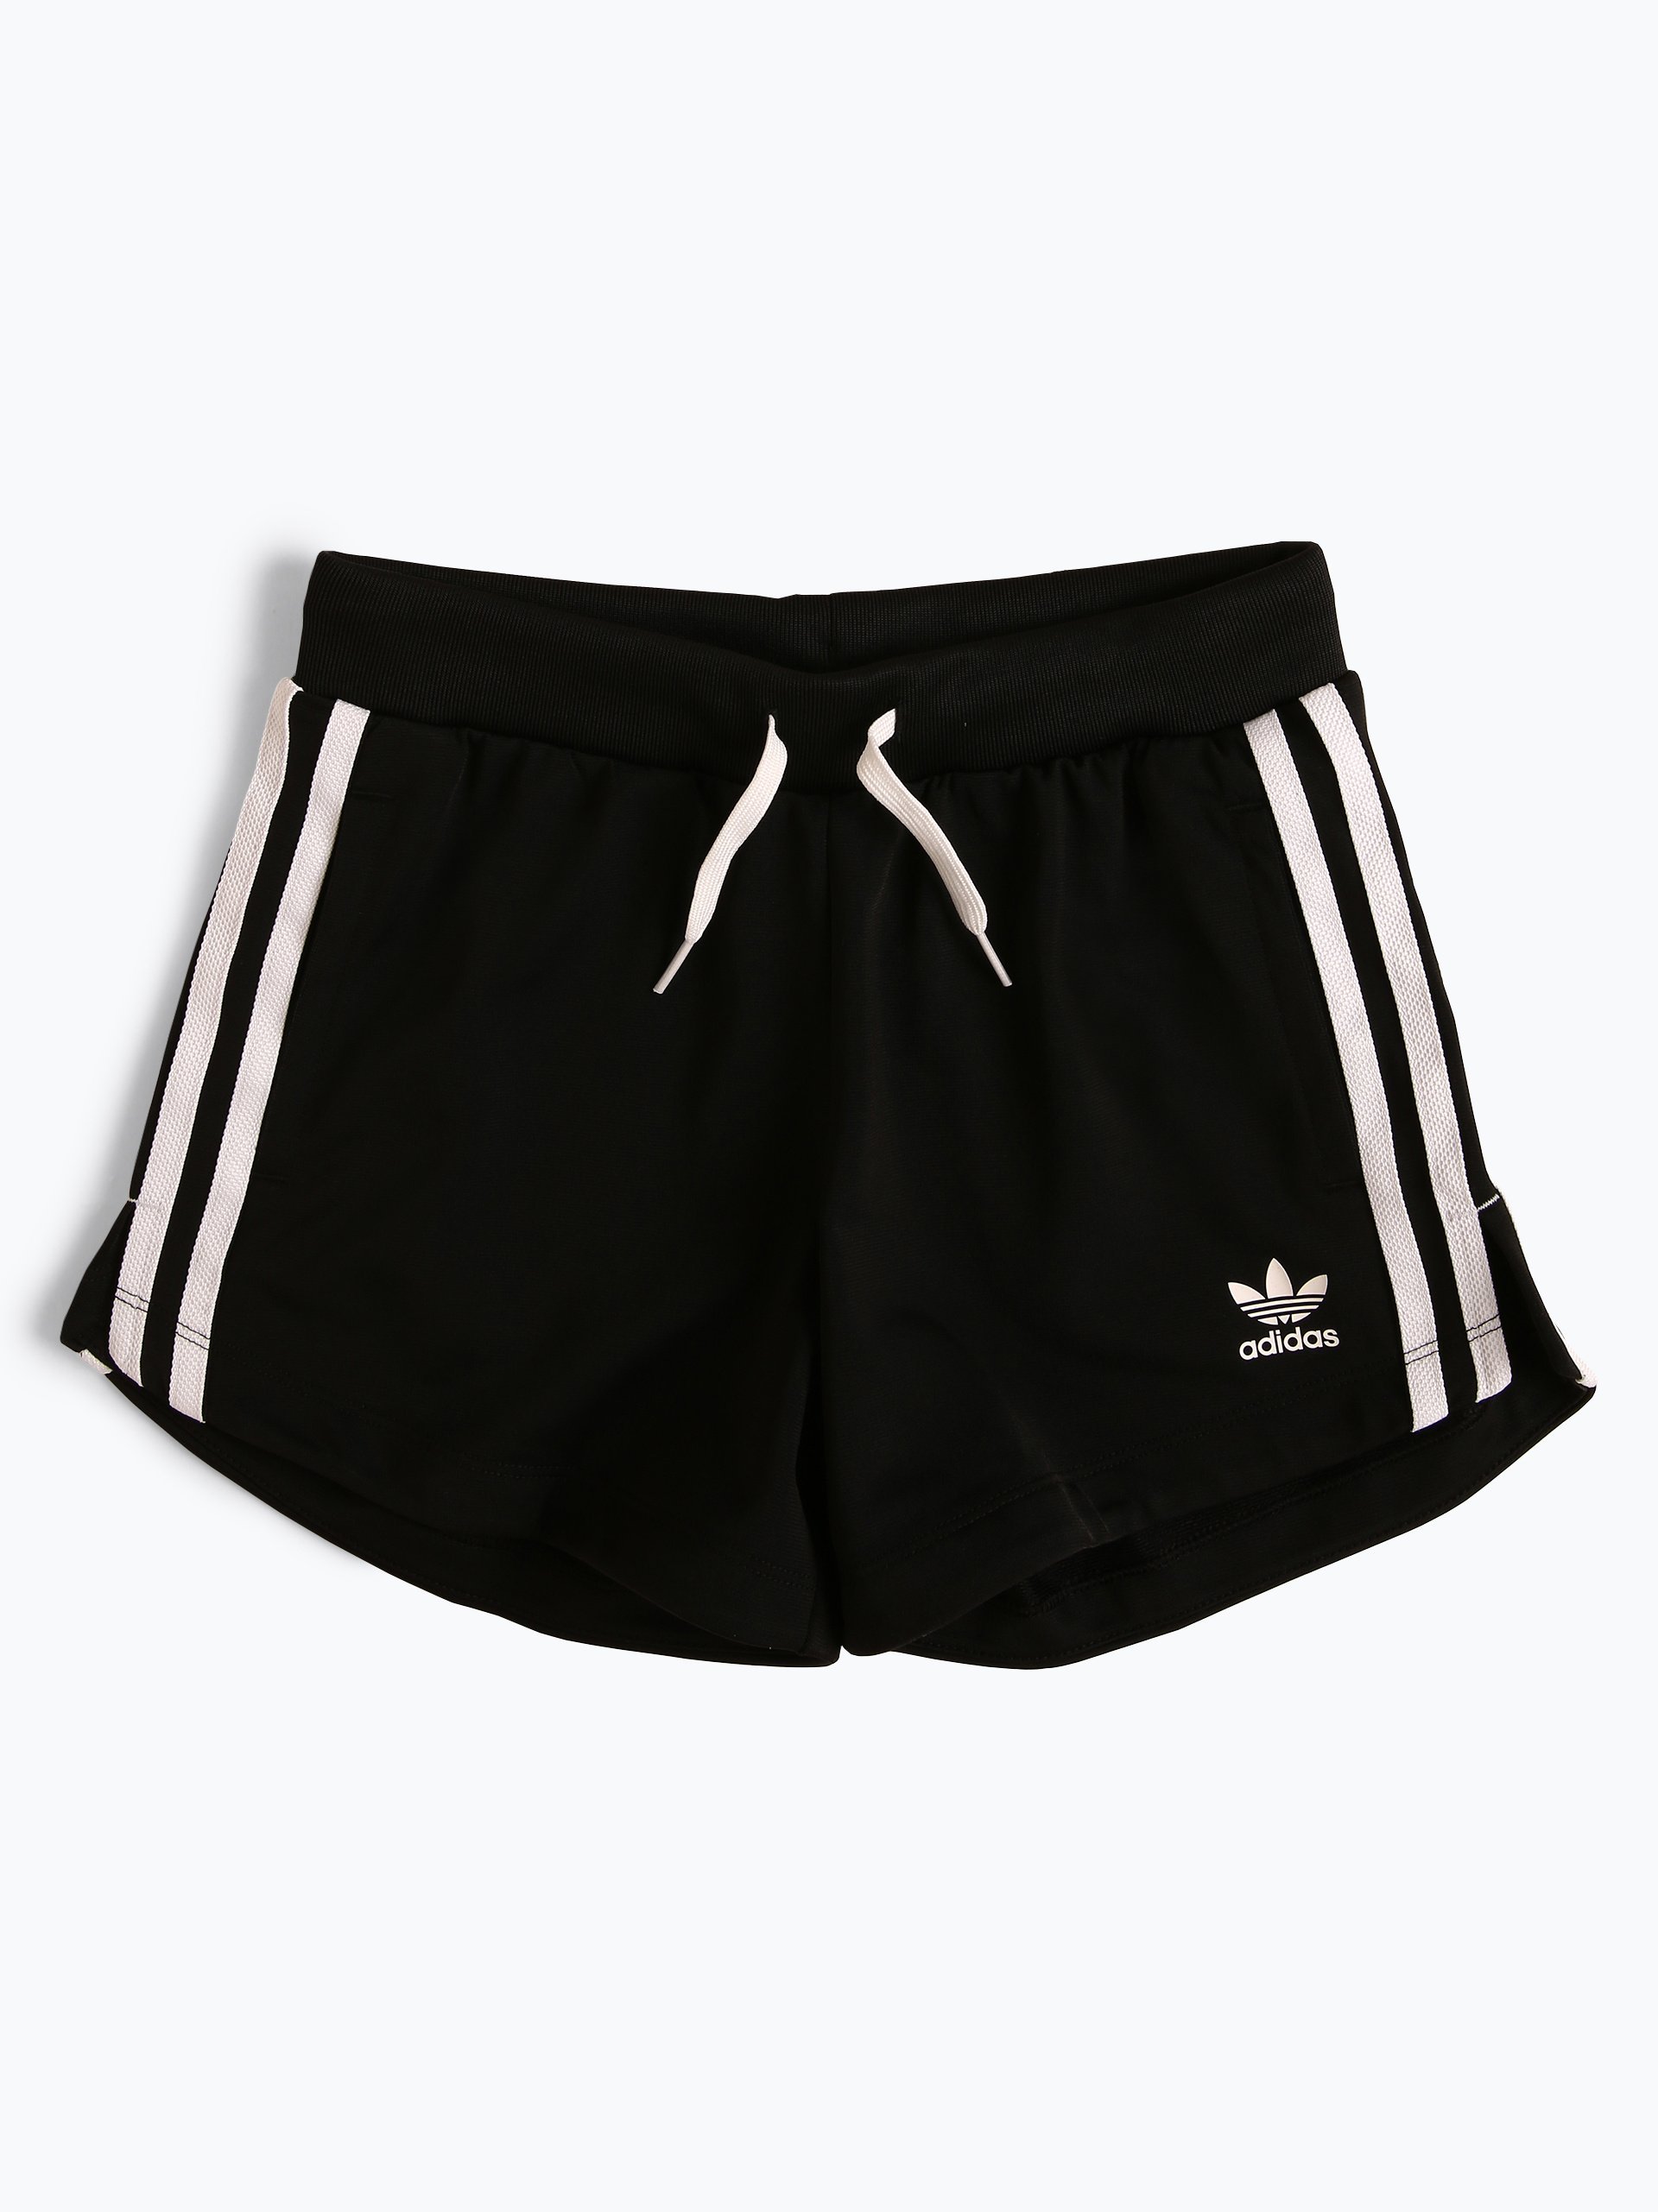 Adidas Mädchen Shorts Gr Mädchen Bekleidung Hosen Shorts DE 152 